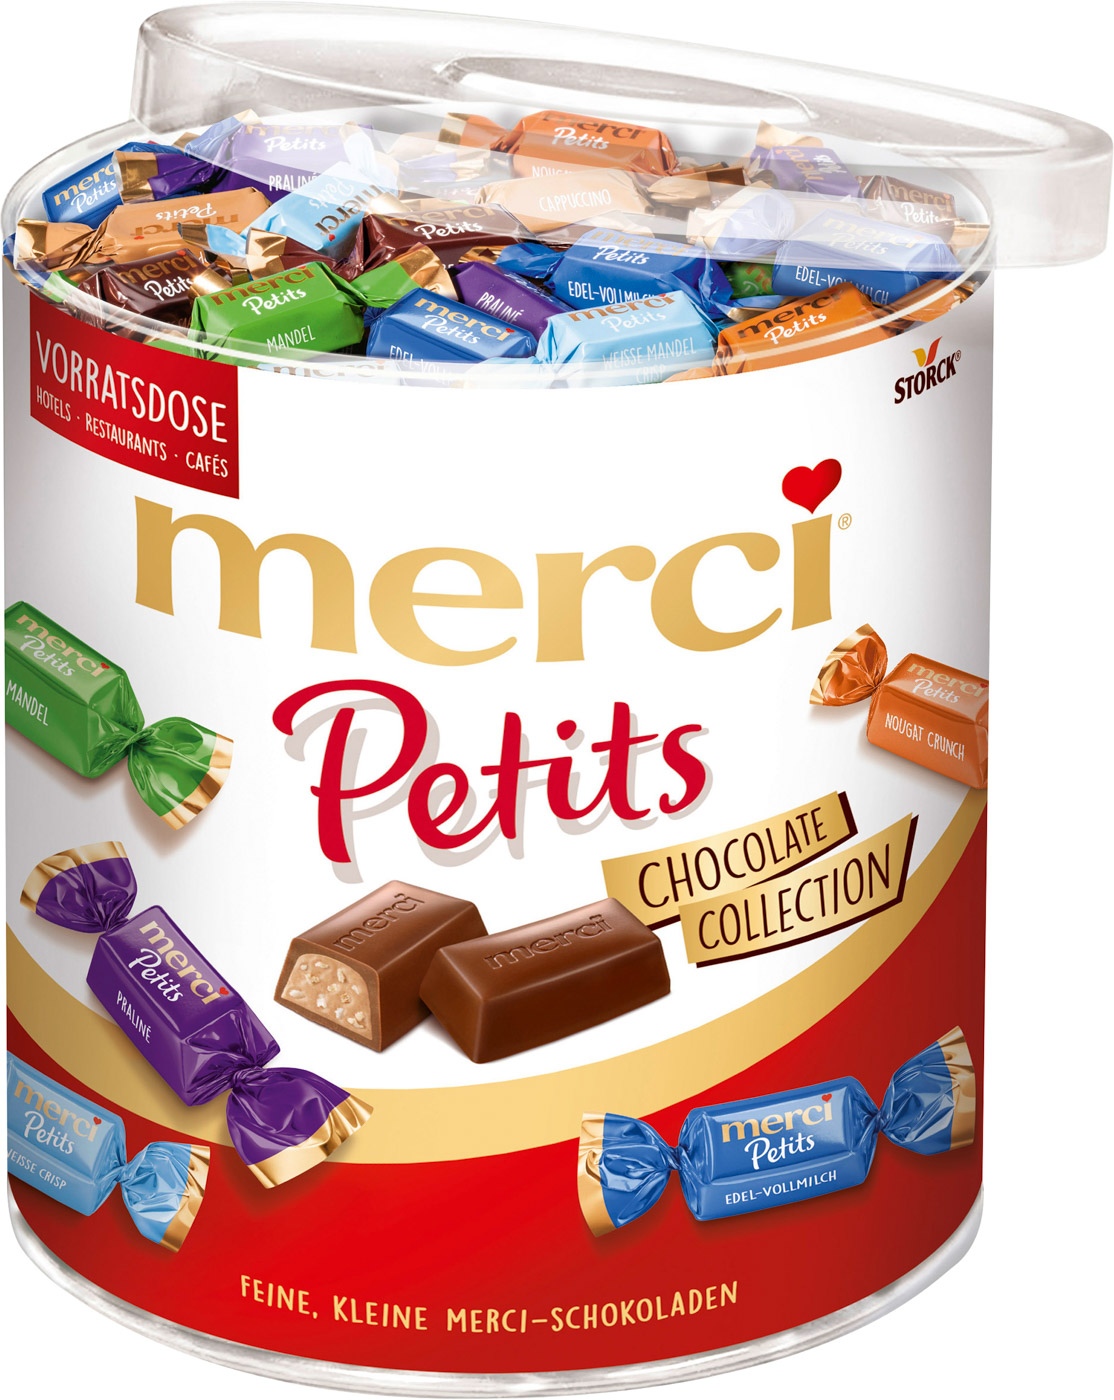 Merci Petits Chocolate C+C Collection 1KG kleine merci-Schokoladen.